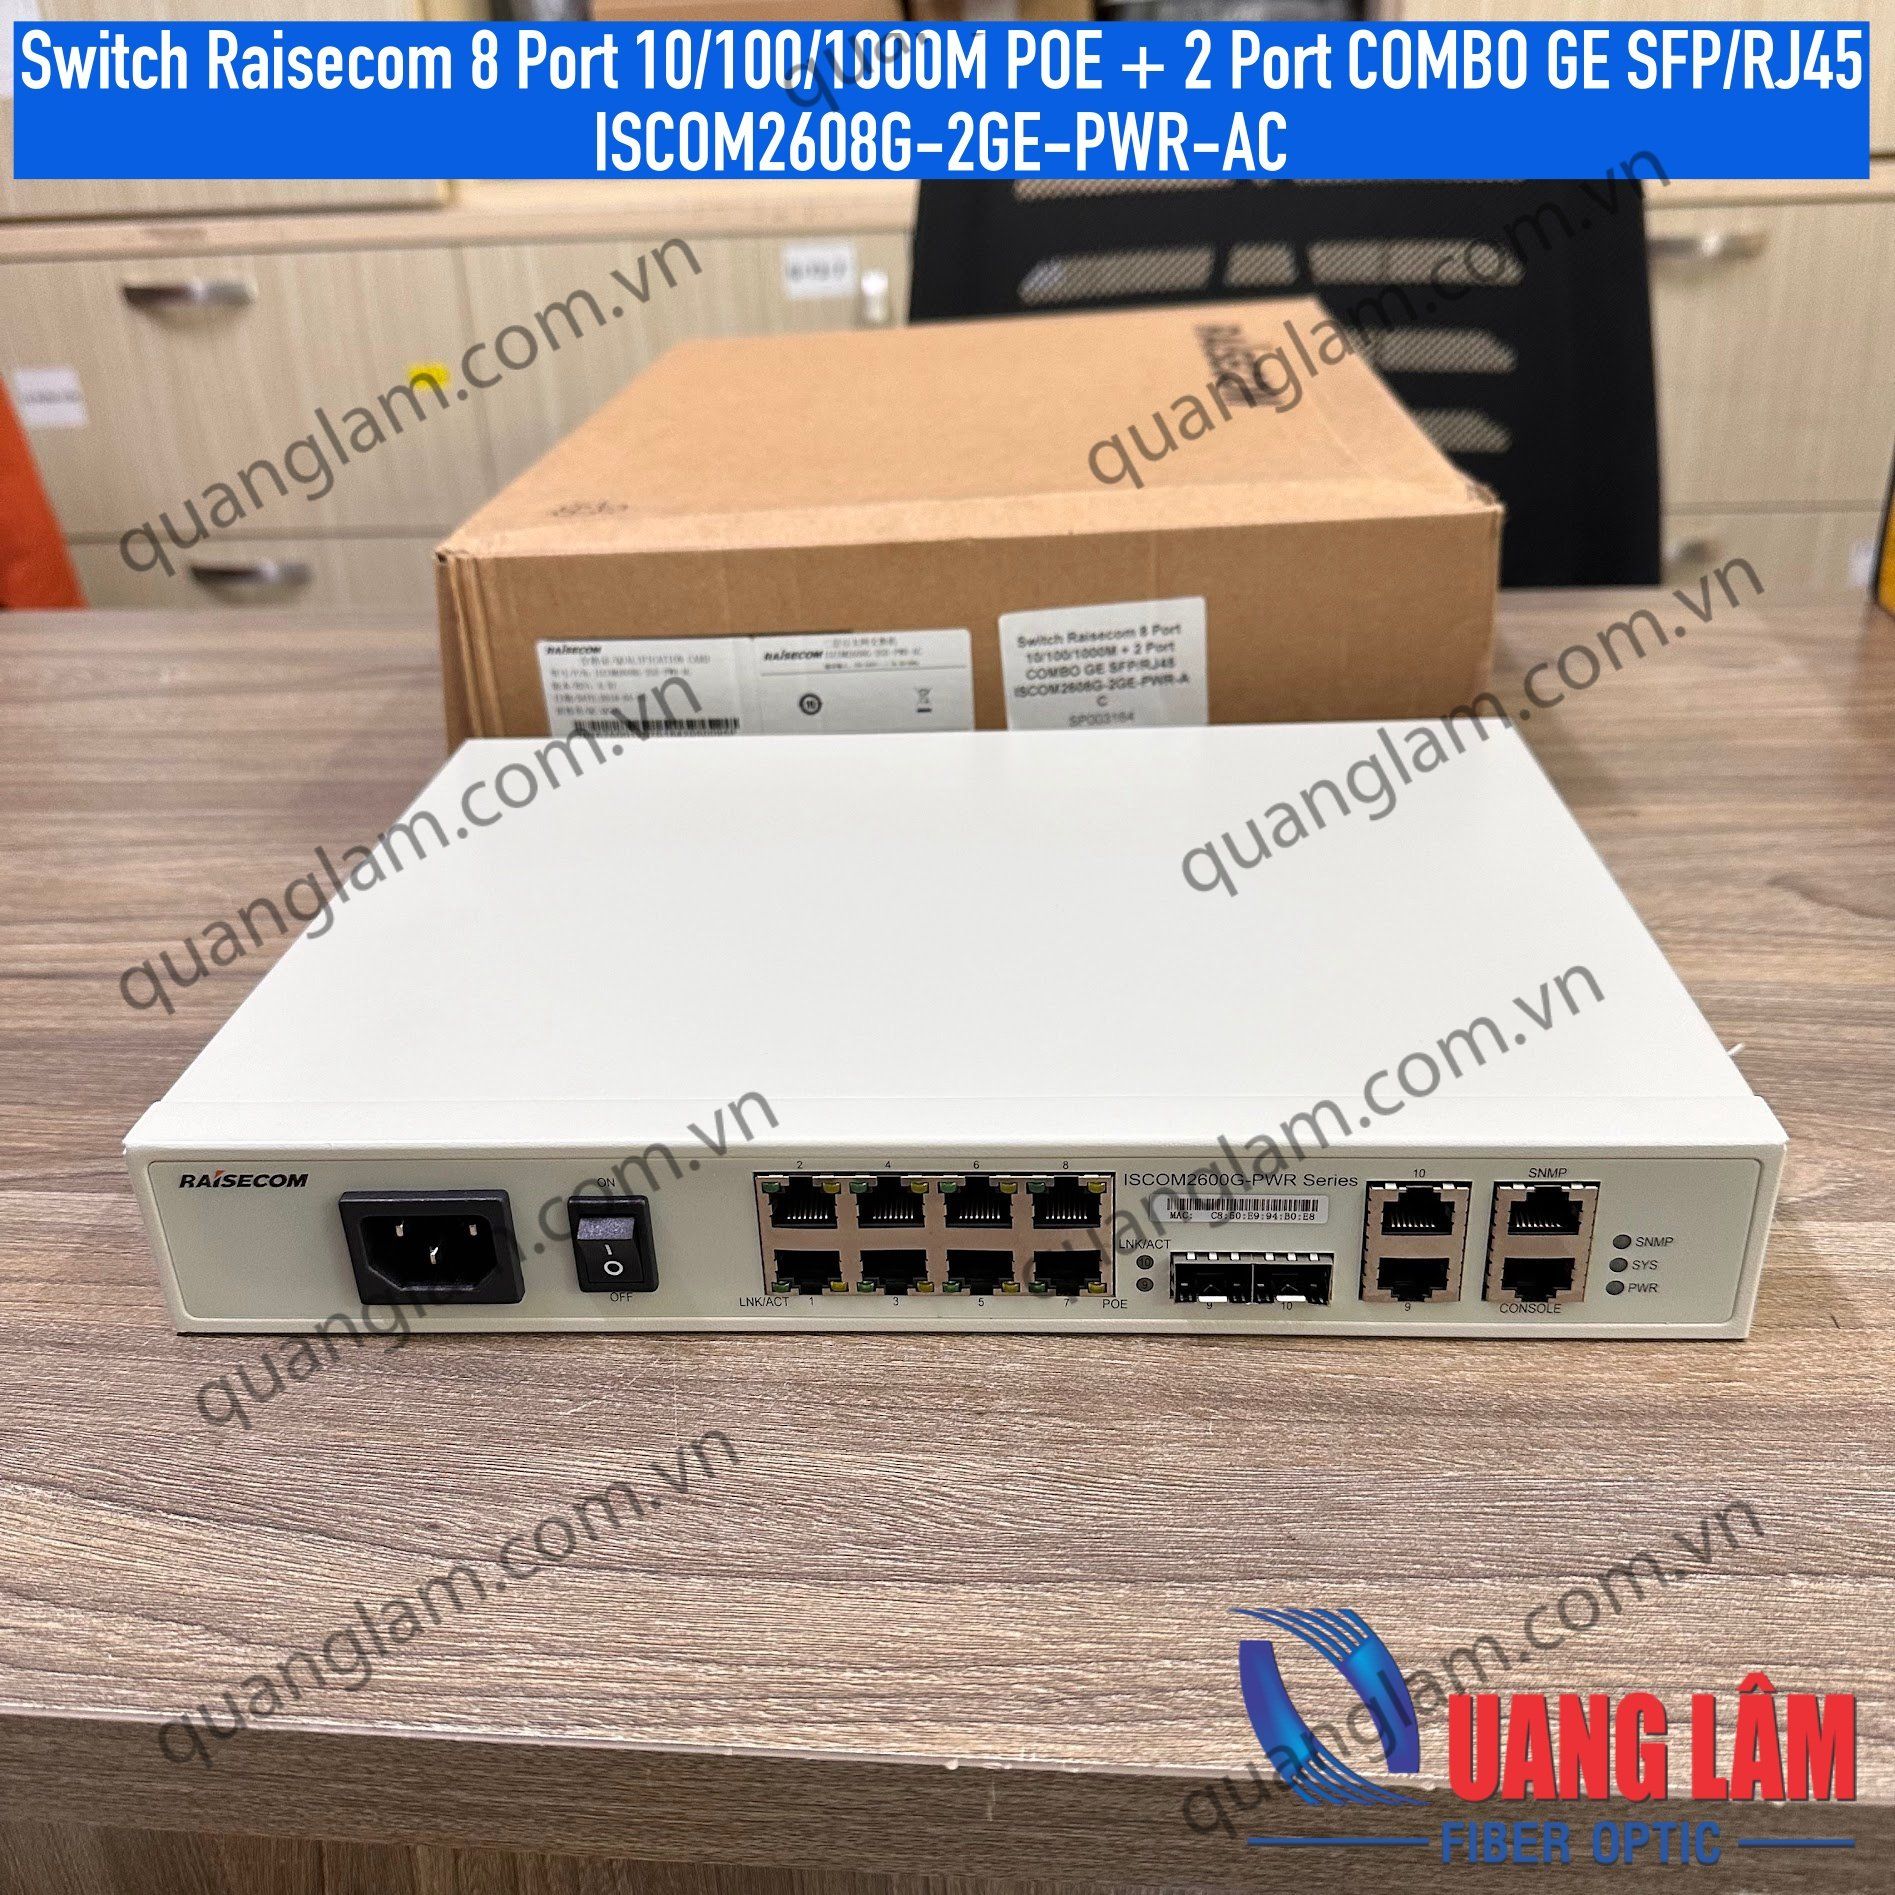 Switch Raisecom 8 Port 10/100/1000M PoE + 2 Port COMBO GE SFP/RJ45 ISCOM2608G-2GE-PWR-AC